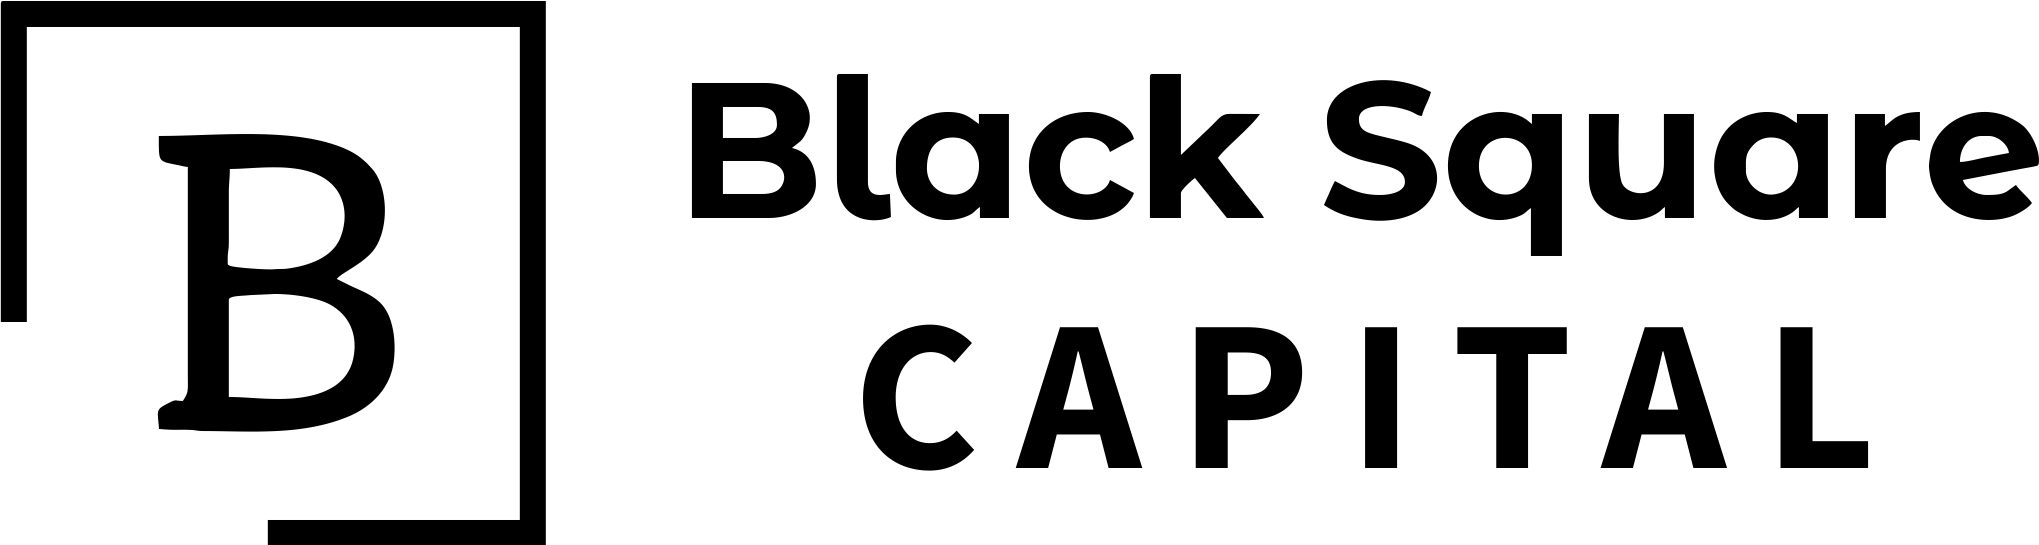 blacksqaure logo1